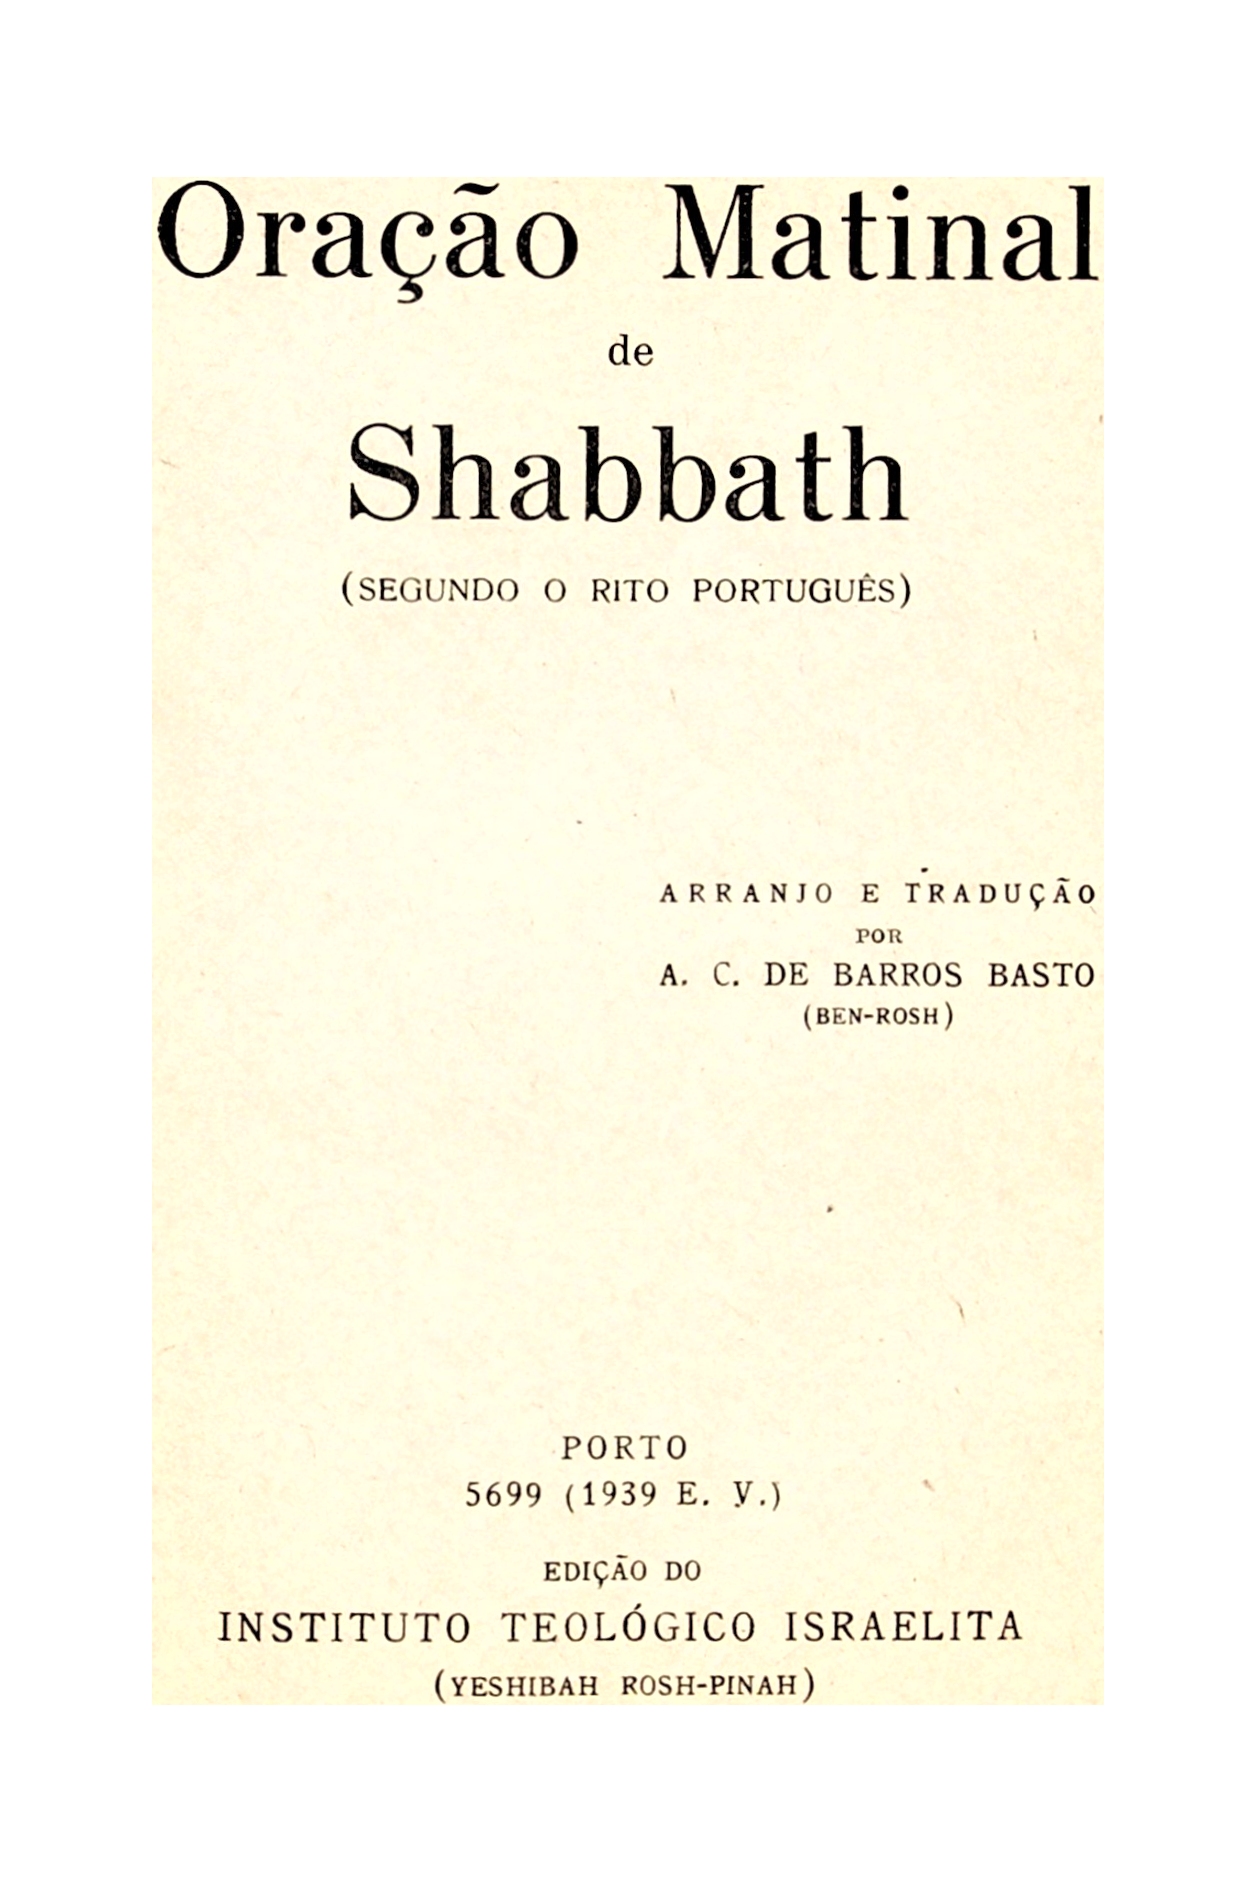 📖 A Oferenda de Shabbath, compiled by Abraham Israel Ben-Rosh